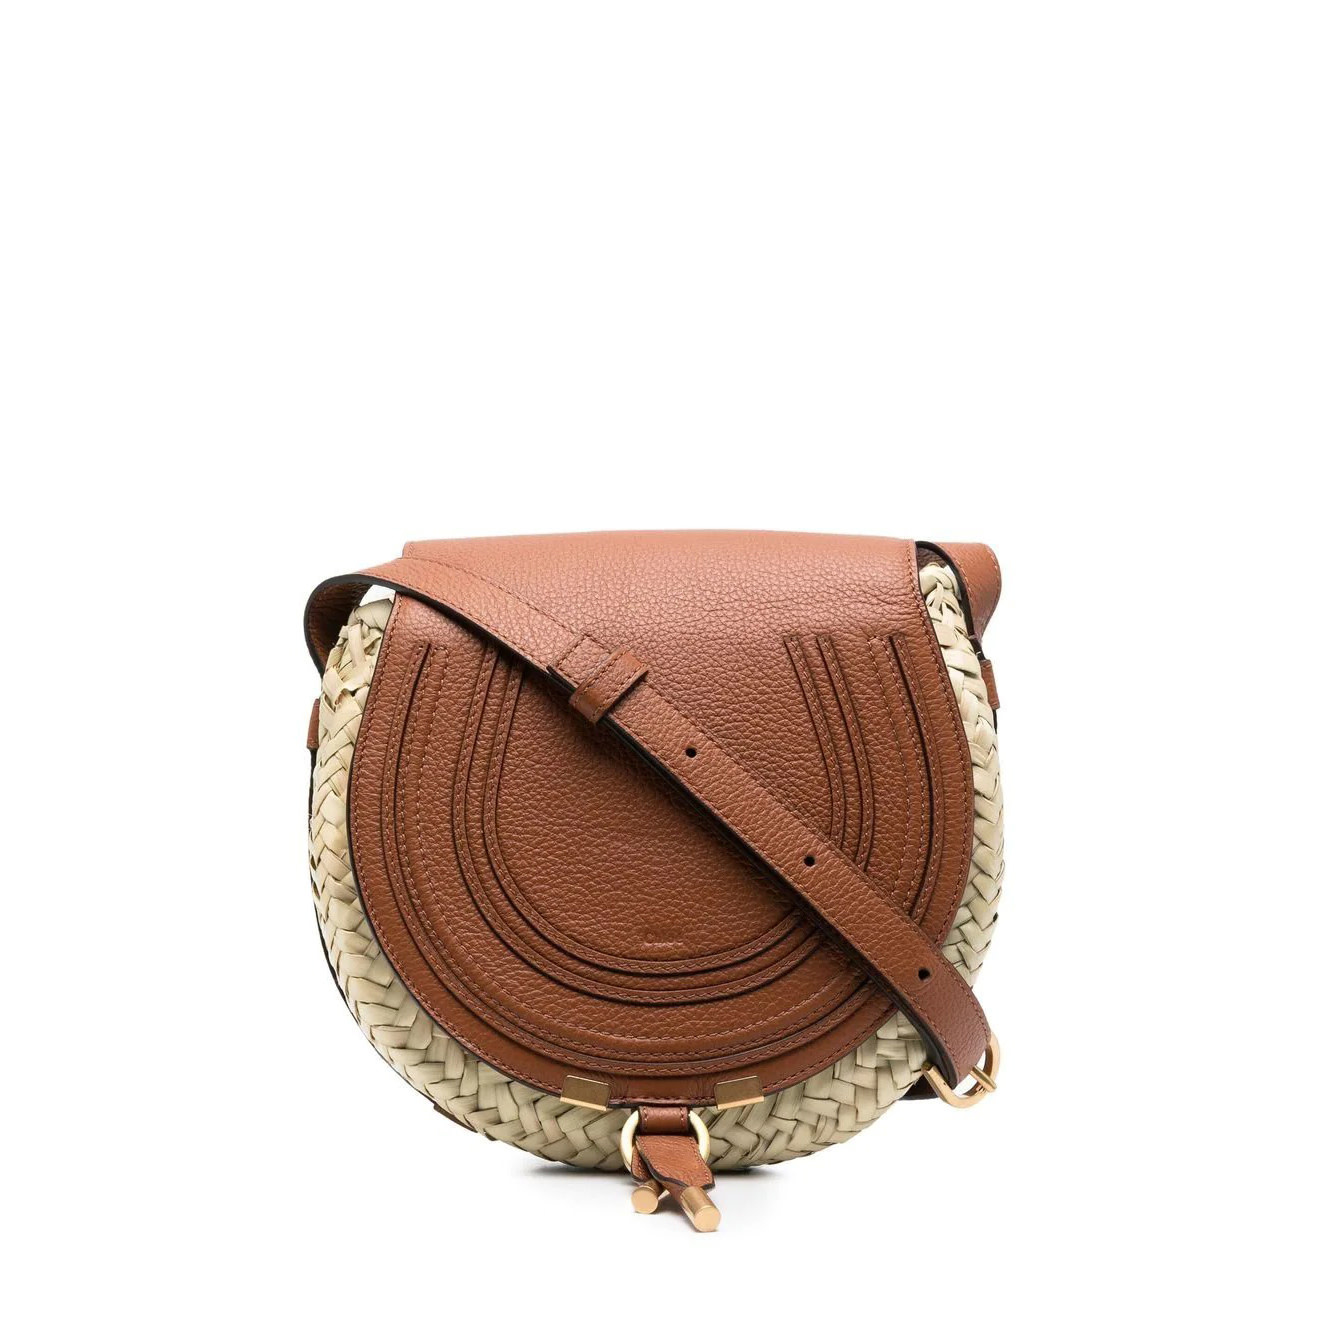 Medium crossbody bag in brown leather and raffia